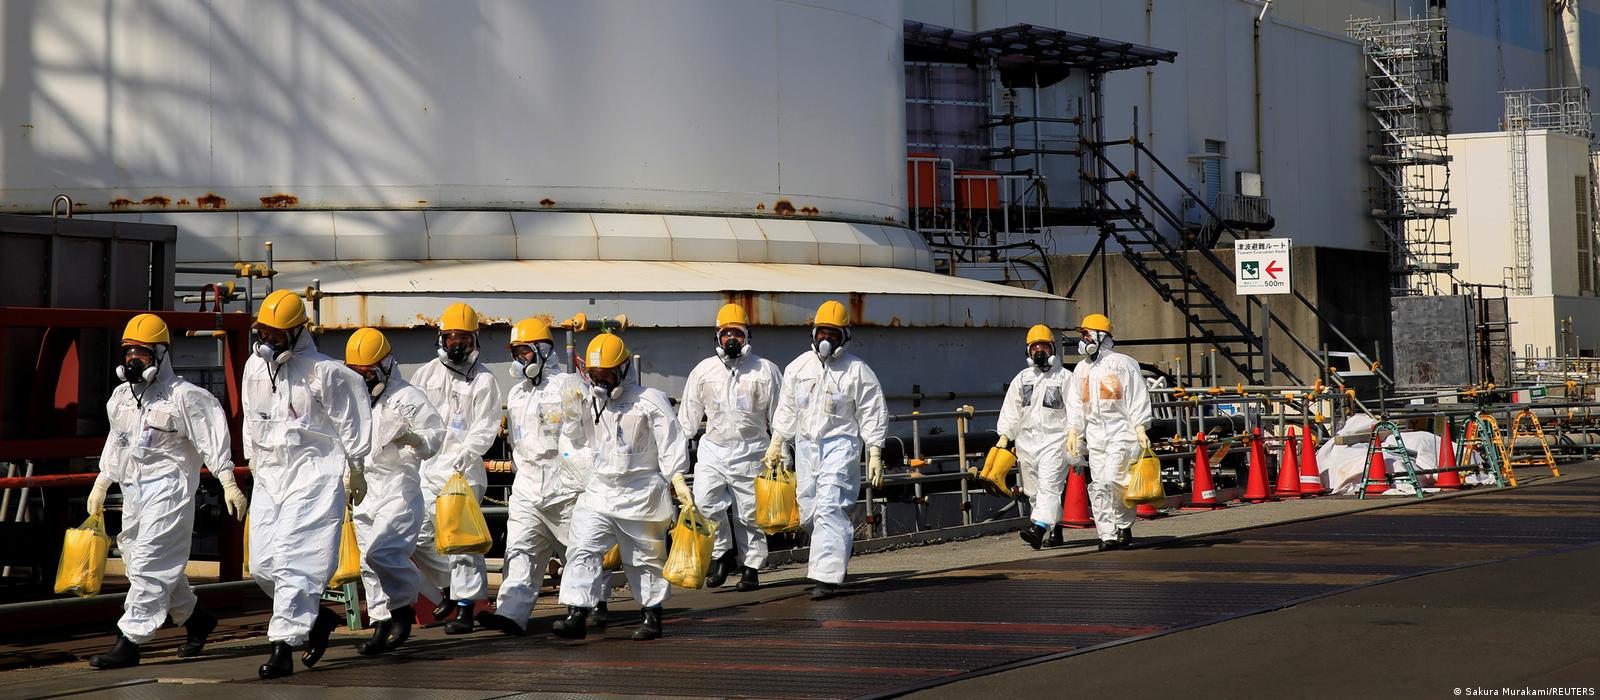 Radiation still a concern 10 years after Fukushima – DW – 03/11/2021